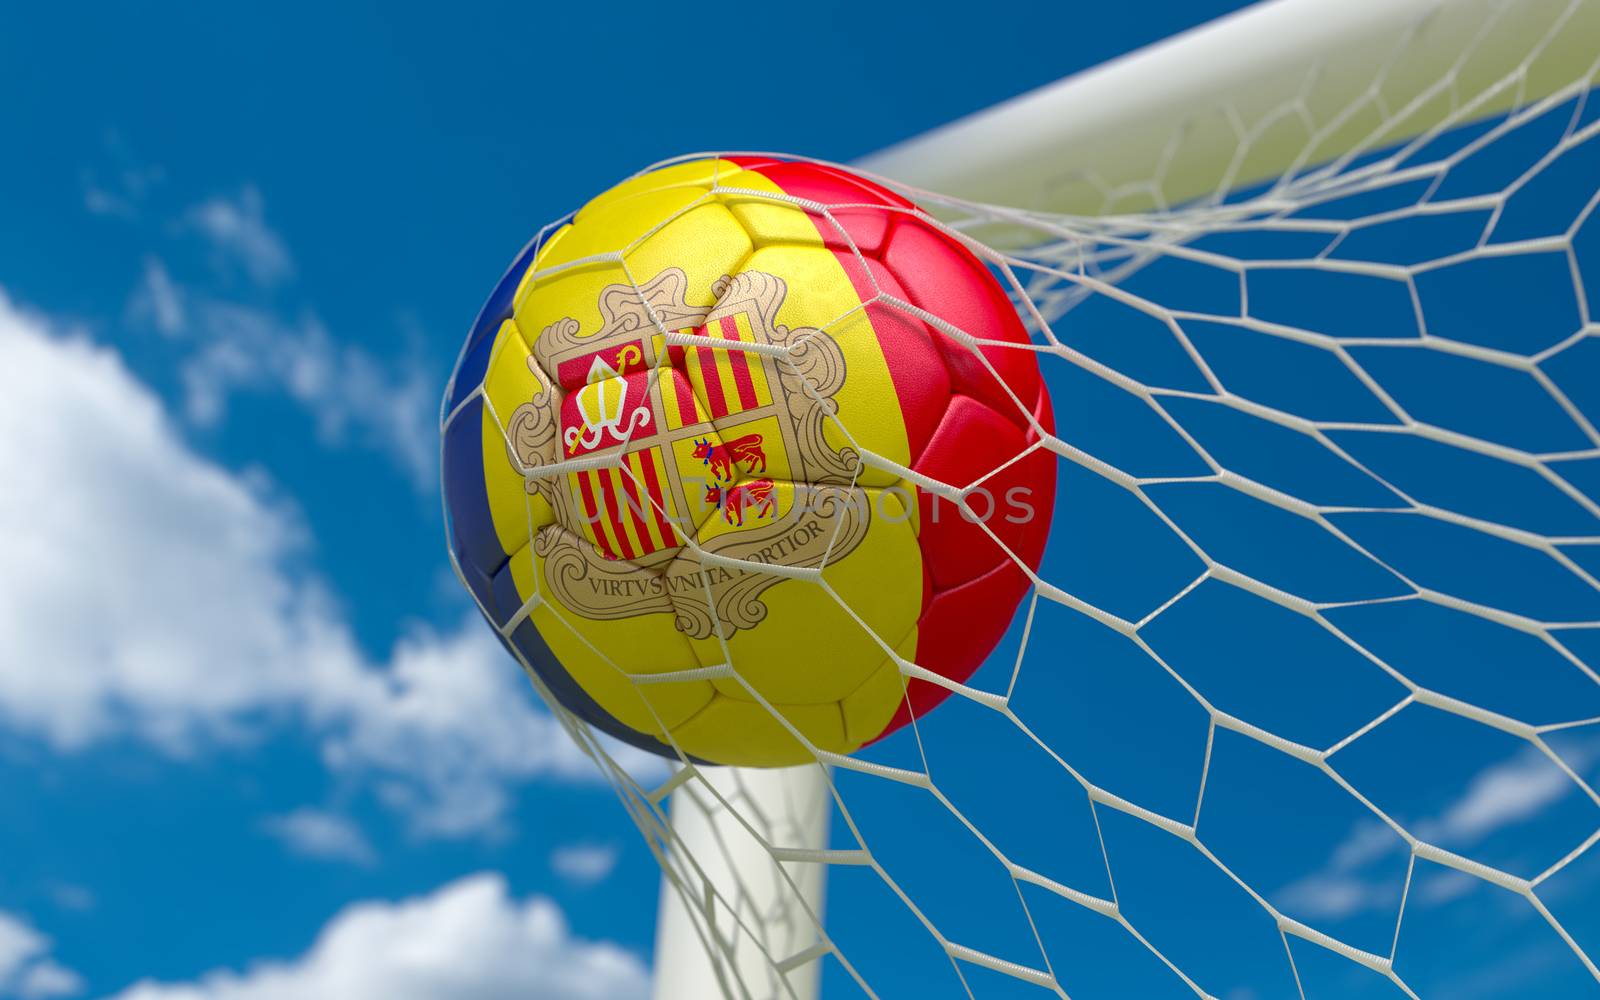 Flag of Andorra and soccer ball in goal net by Barbraford